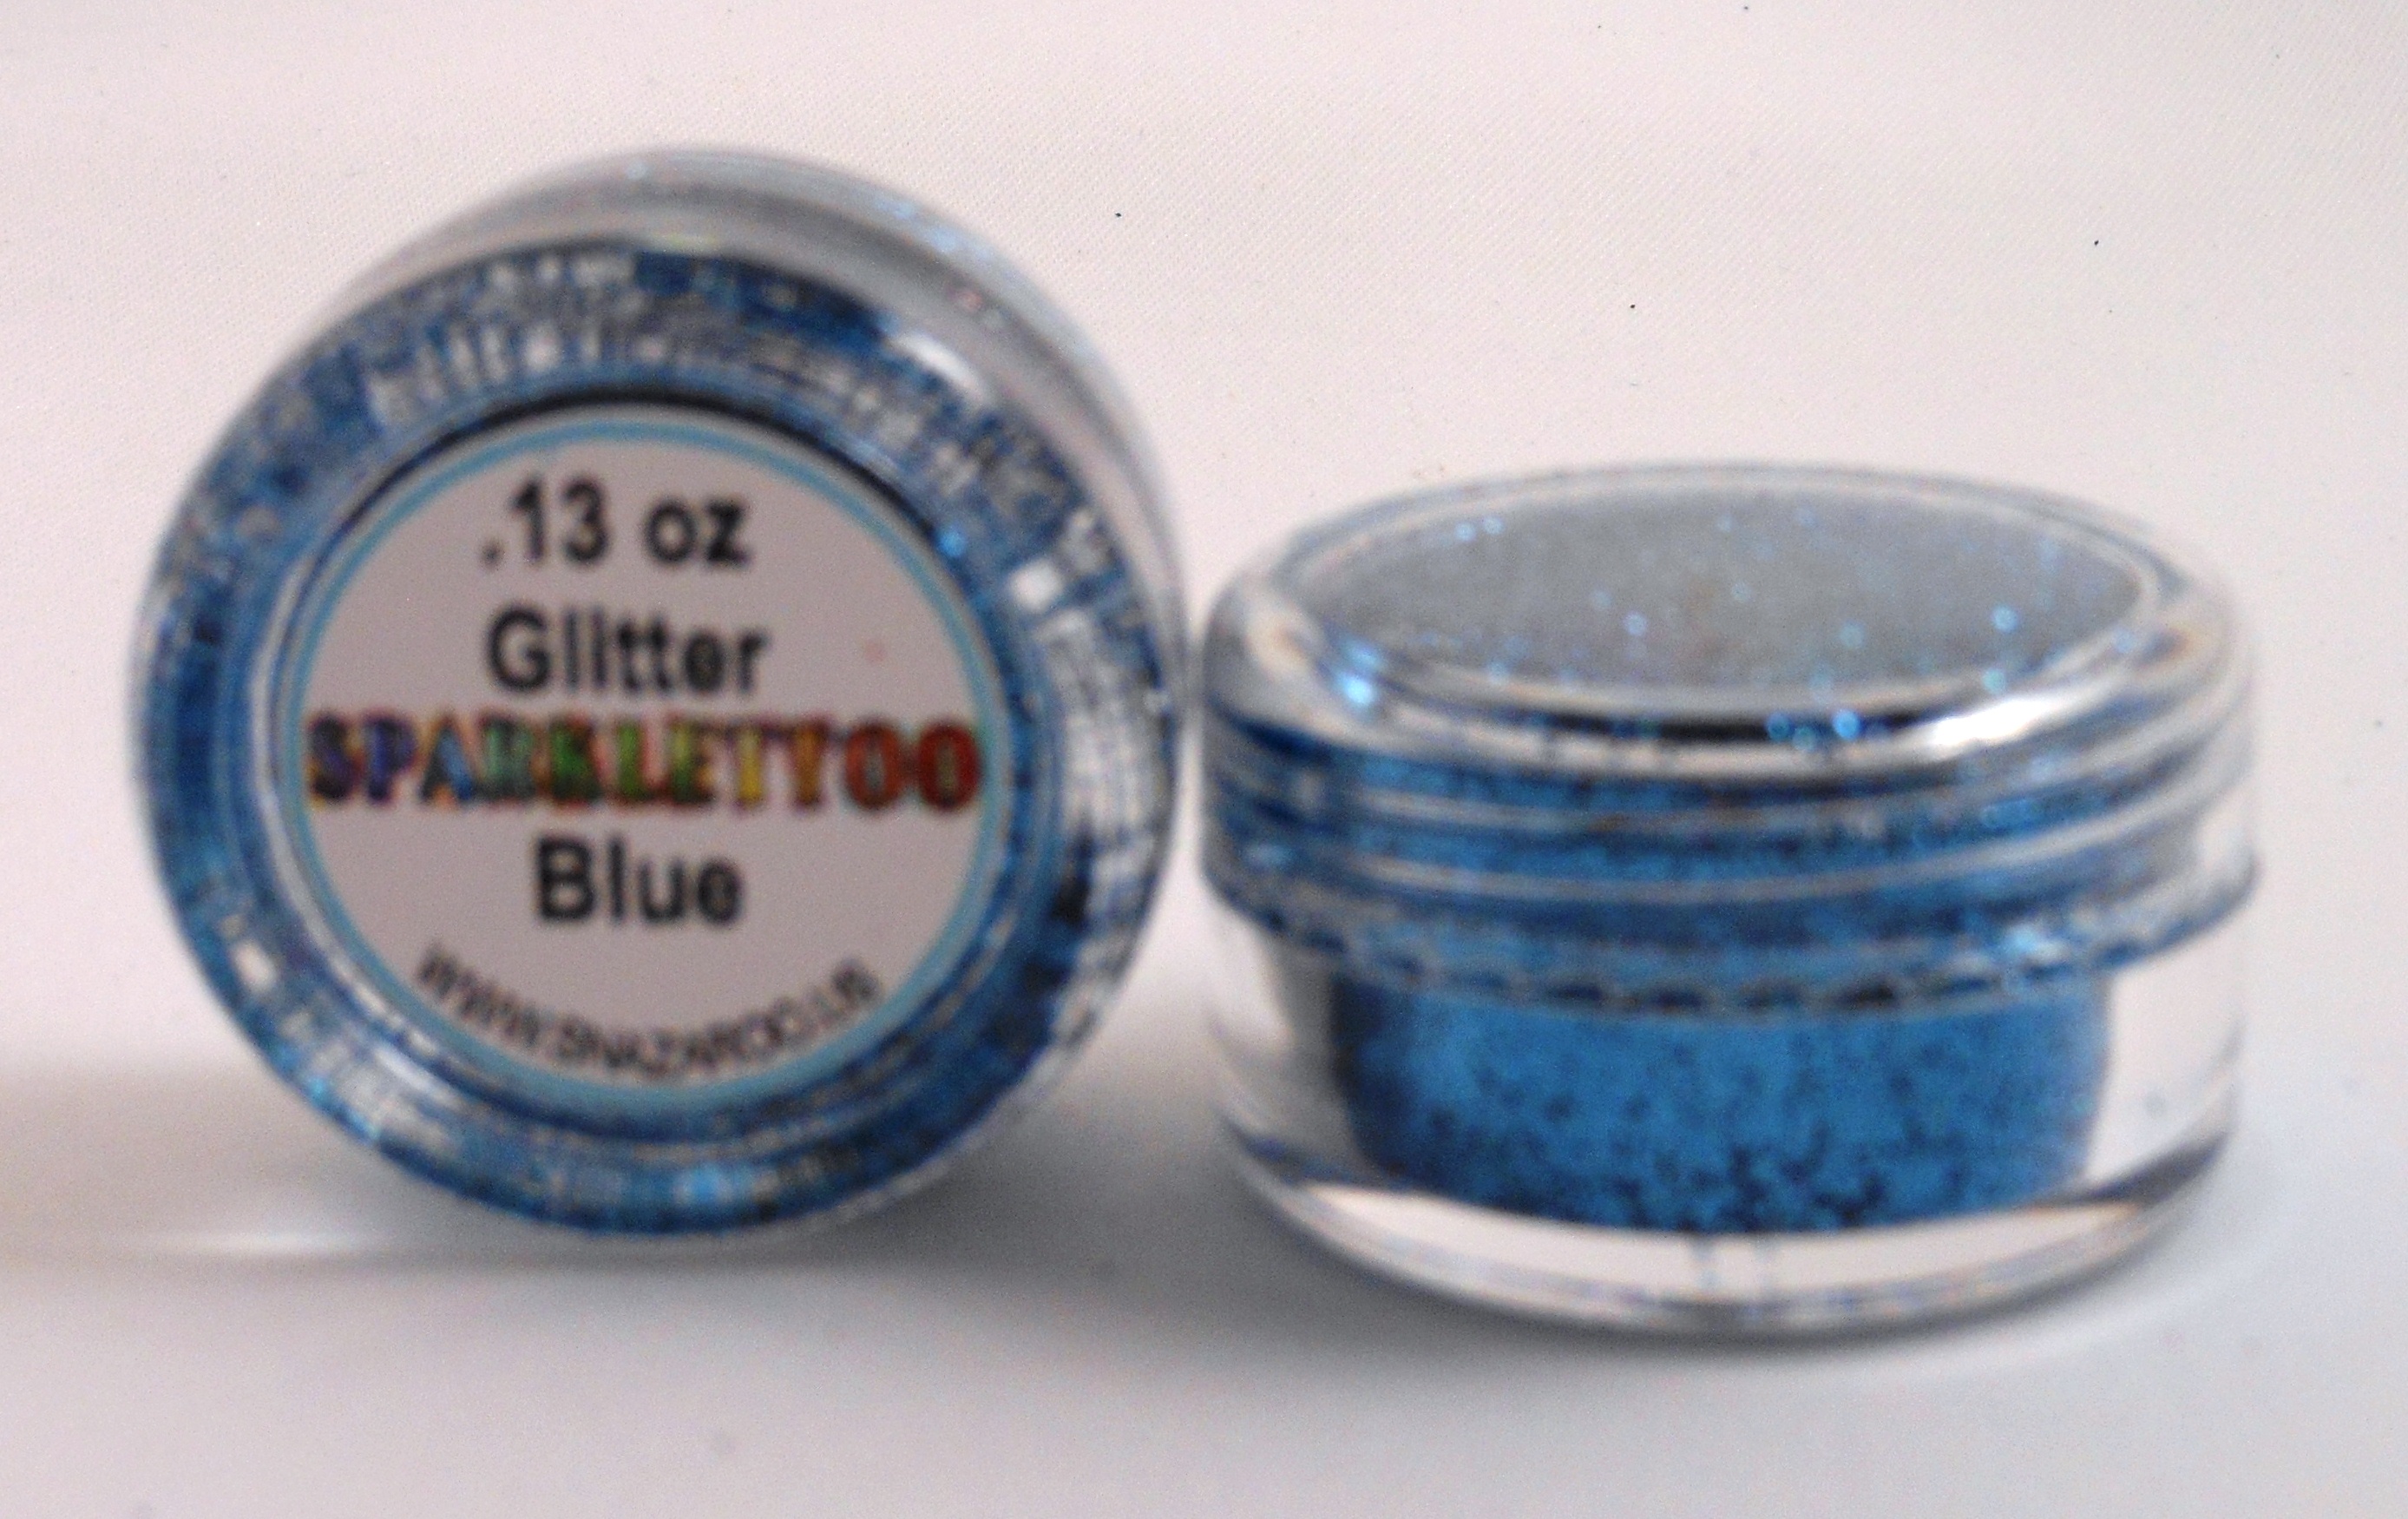 Glitter Blue .13 oz.  